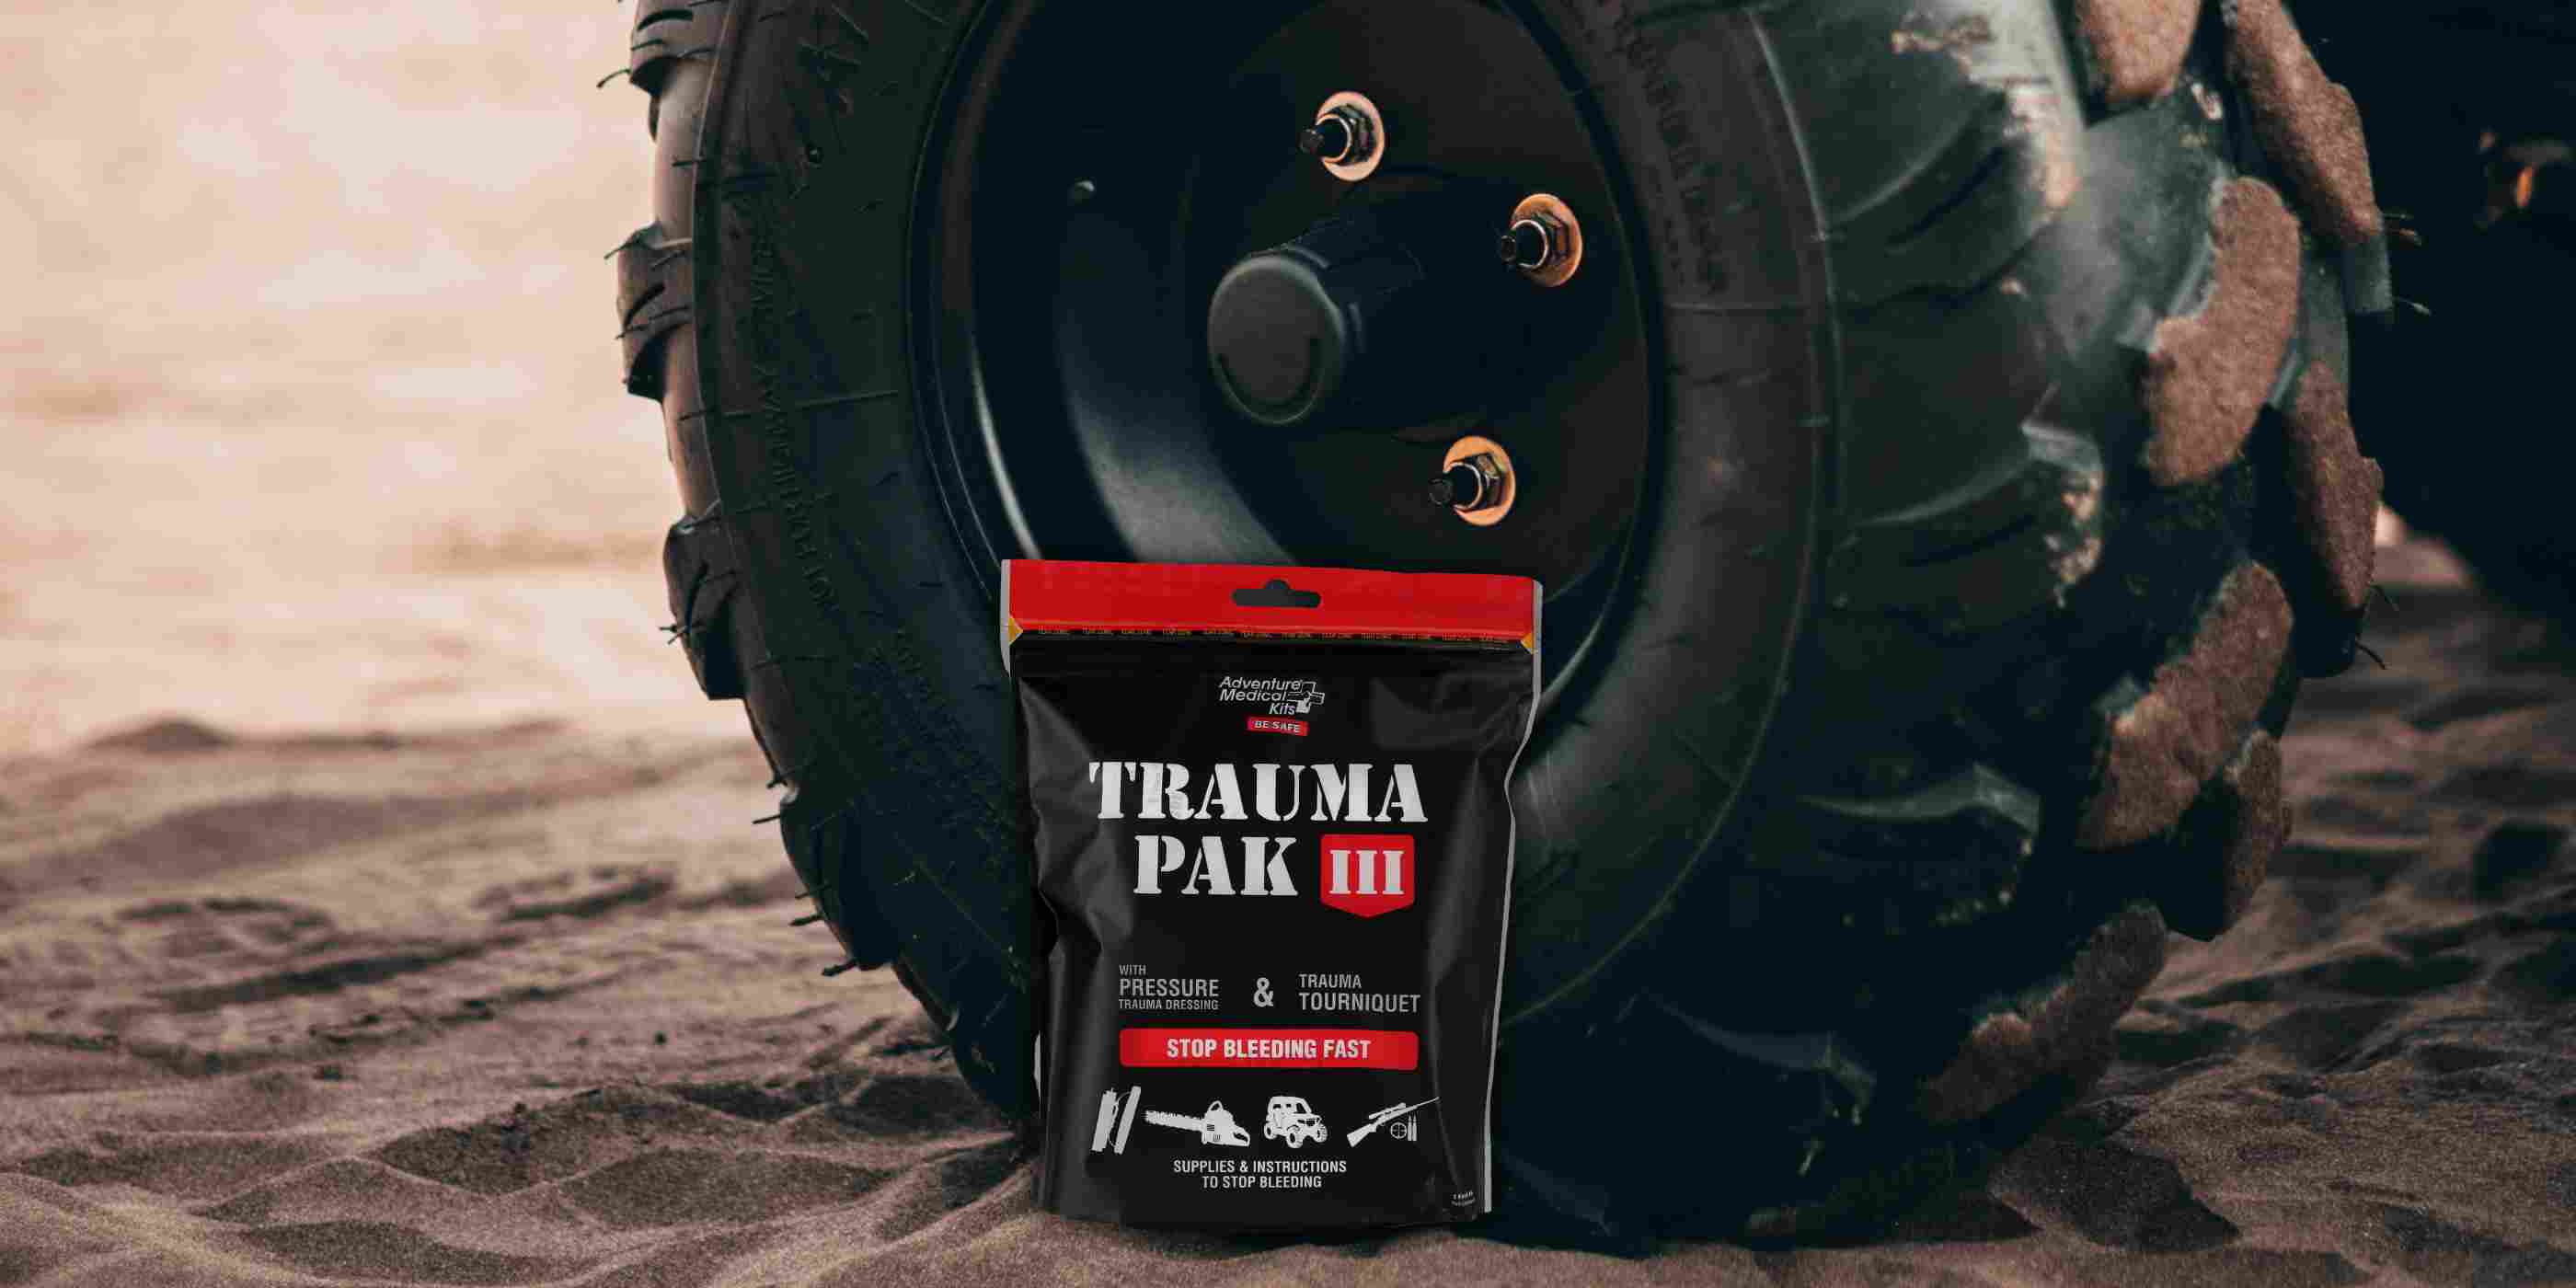 Trauma Pak III in front of truck tire